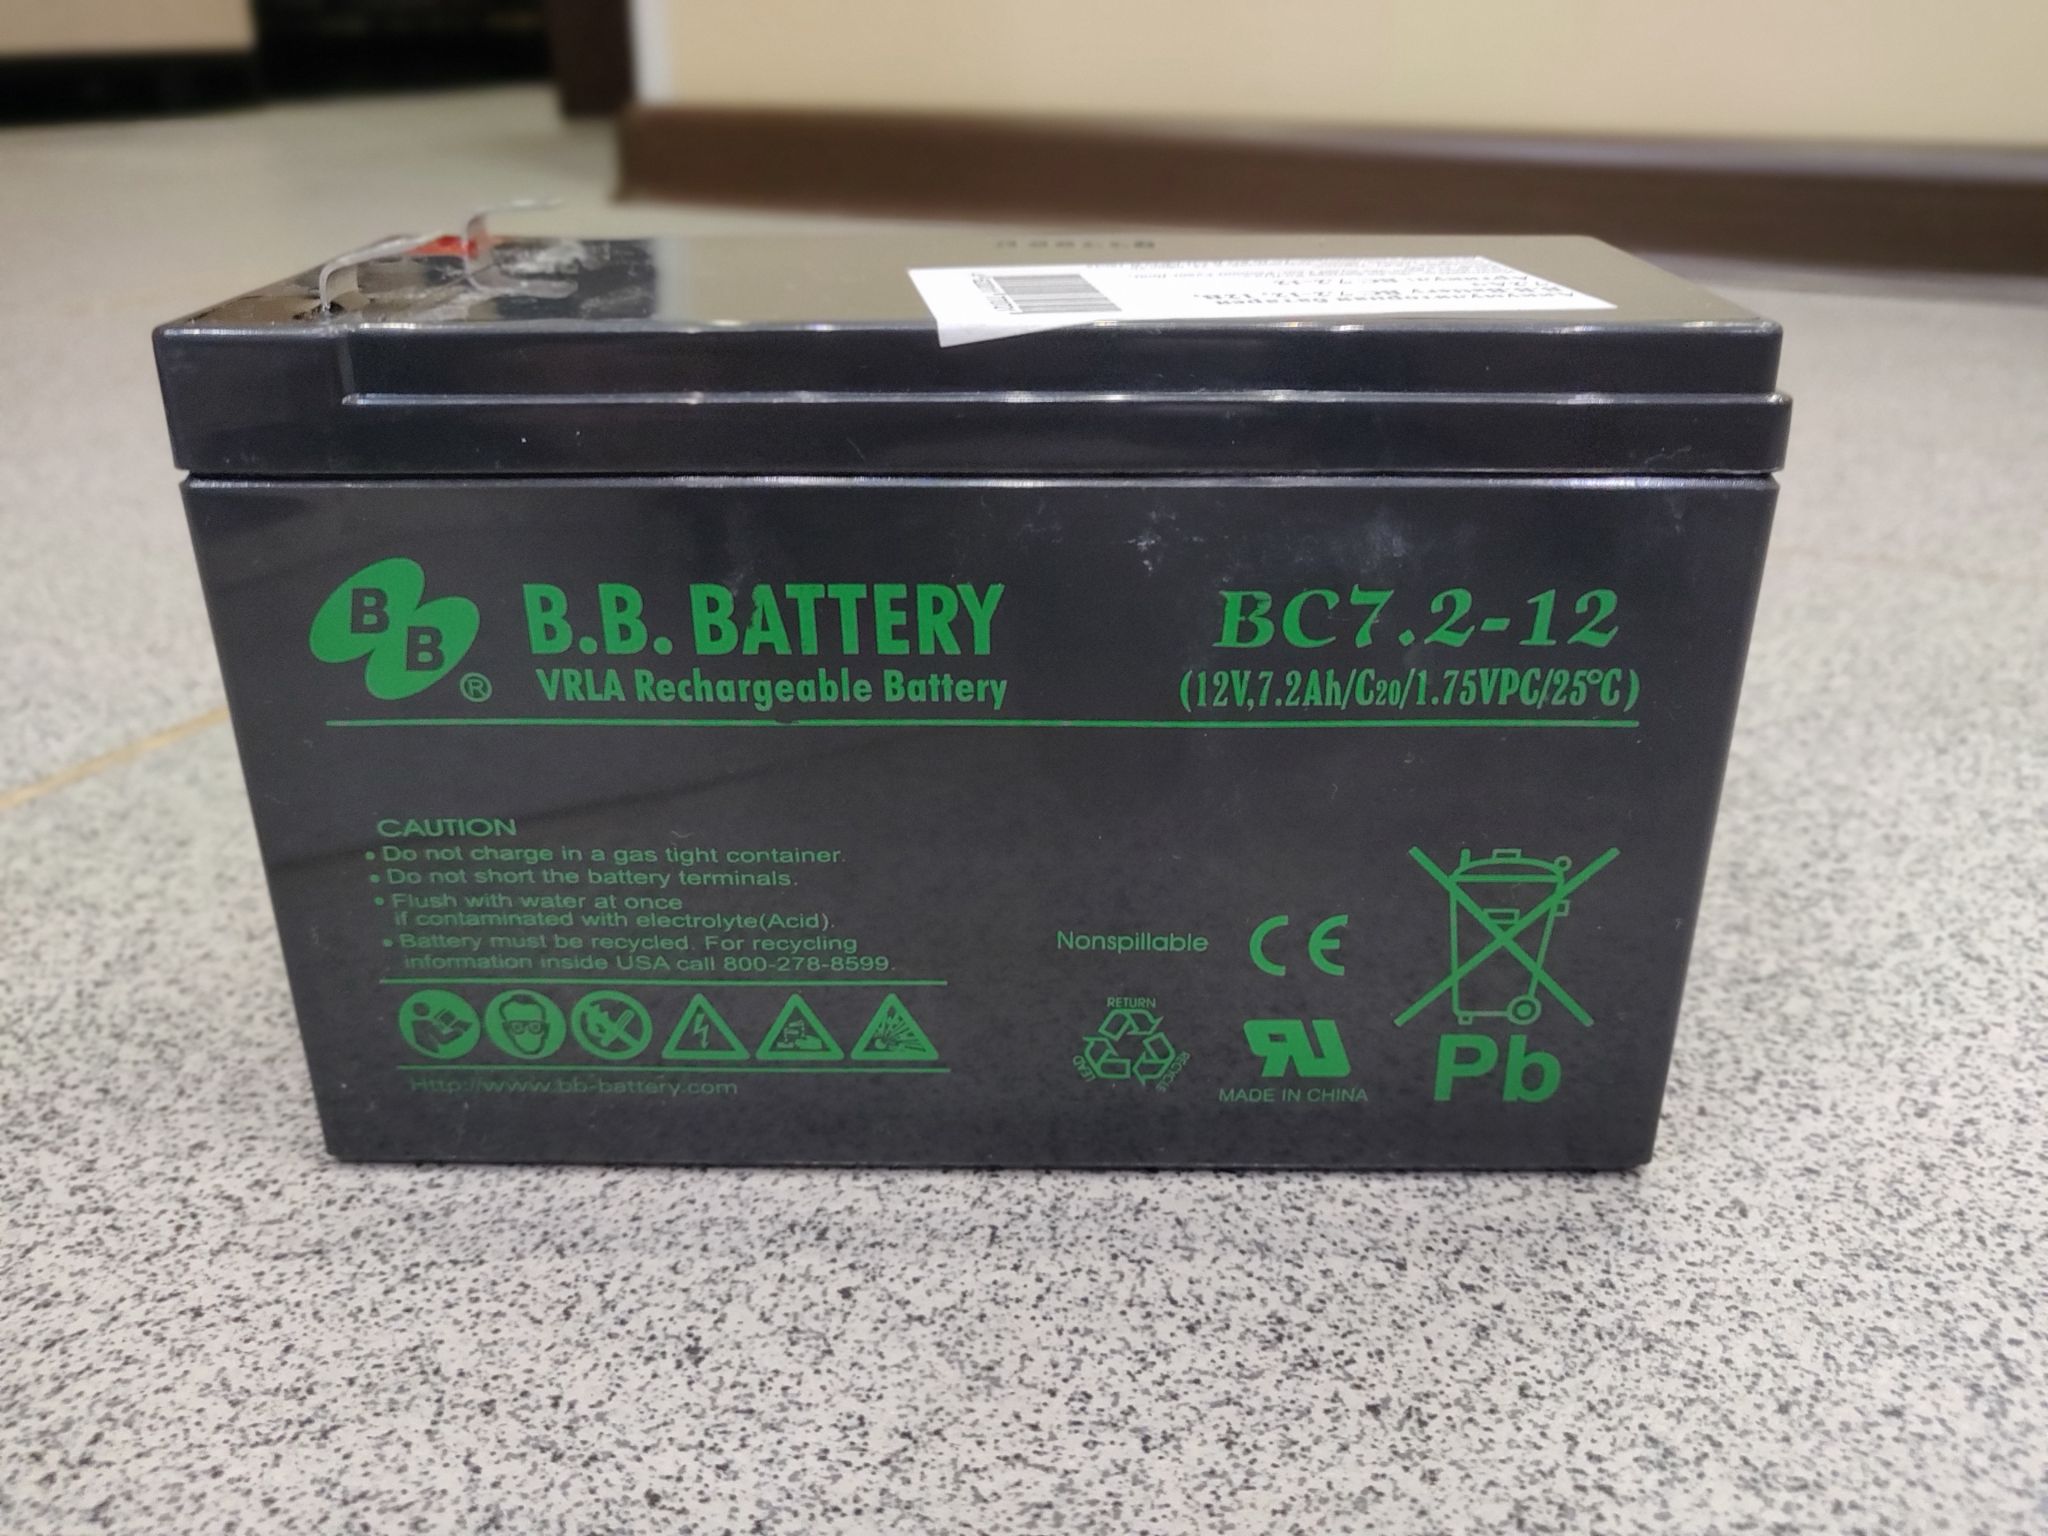 B b battery. Аккумулятор для ИБП 12v 7ah b.b. Battery bc7-12. BB Battery hrl9-12 этикетка. Тип вывода b3 на АКБ B.B Battery. B.B.Battery CPS 7-12 аналоги.